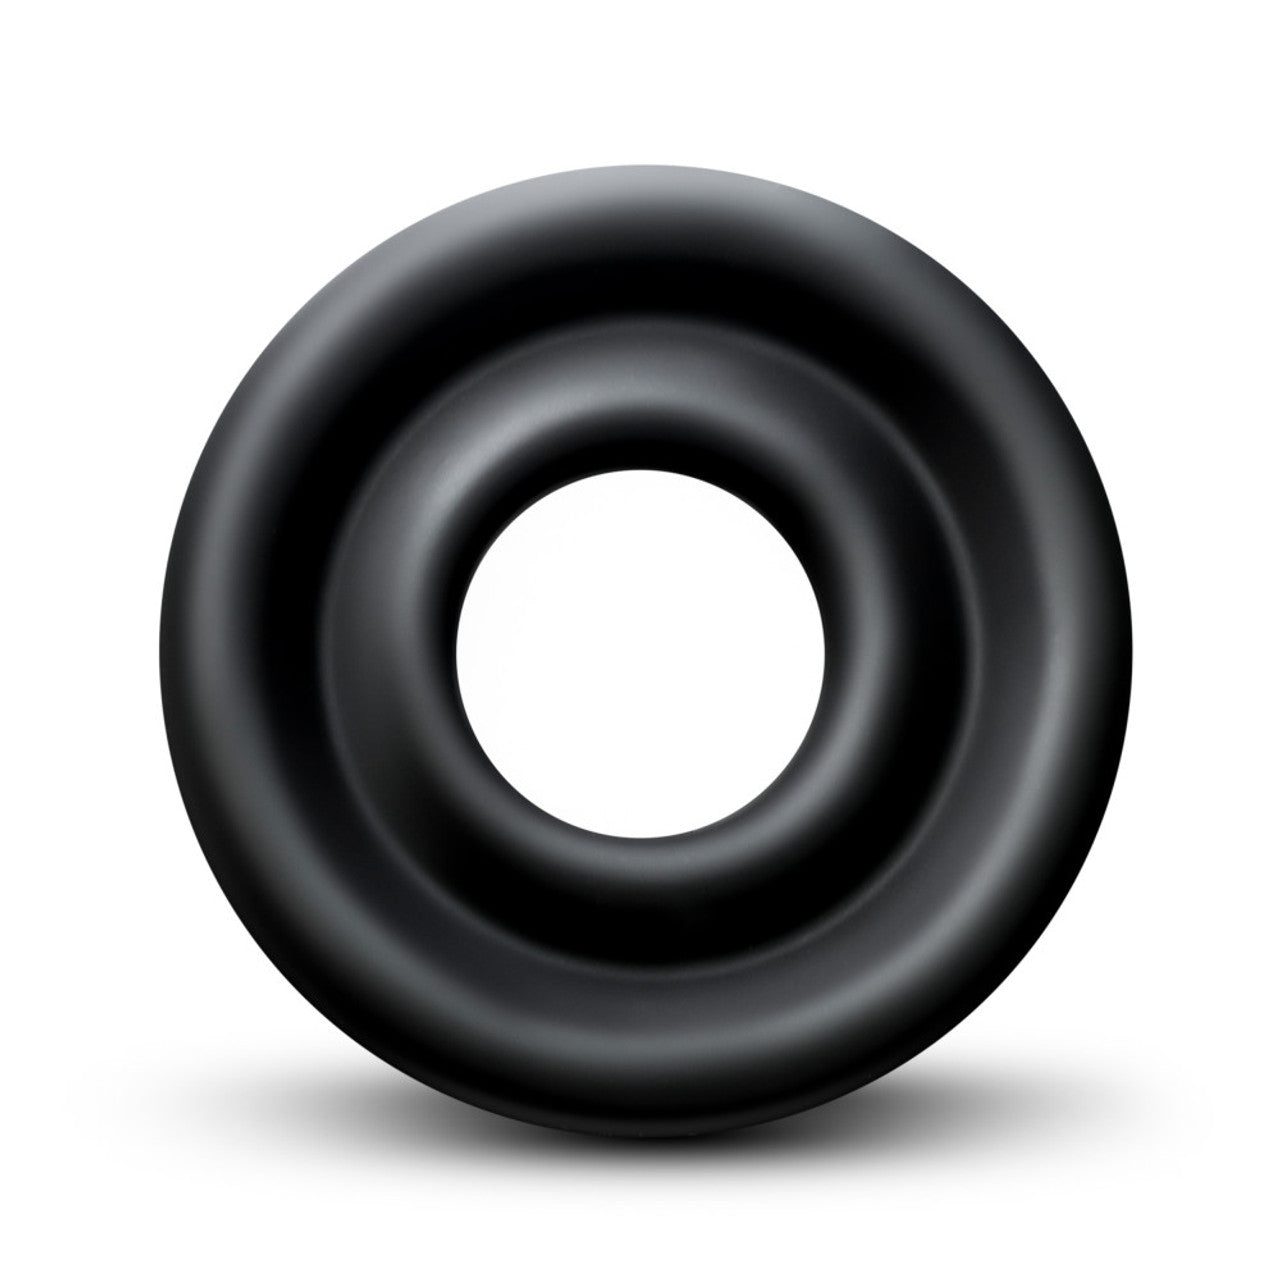 Manchon de pompe en silicone – Moyen, noir